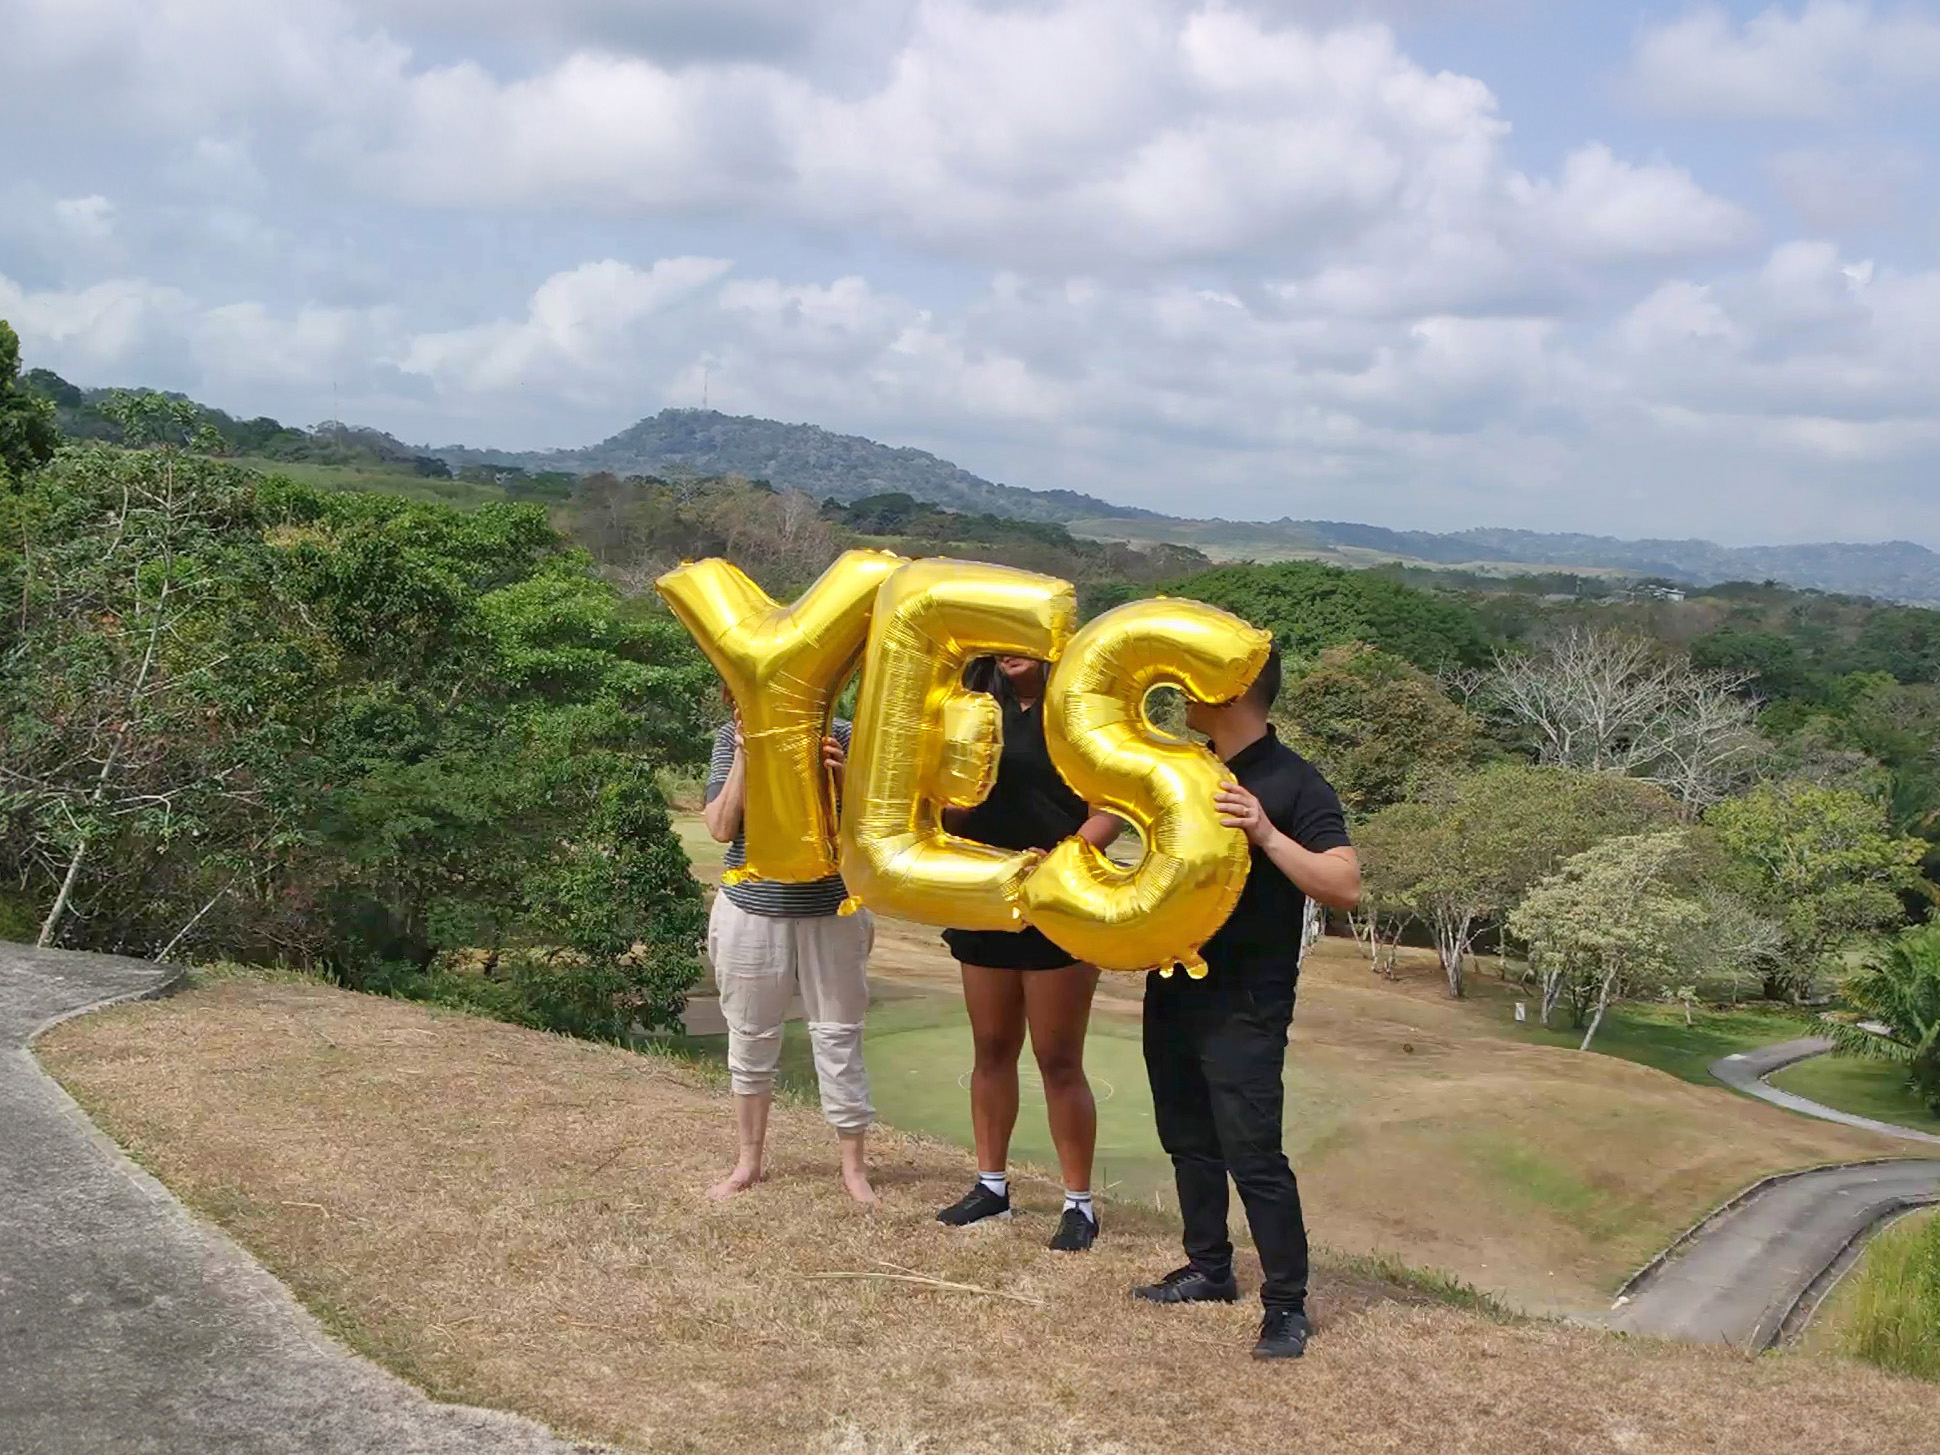 Panama, Panama City, Summit Golf Club - Yes, Silence was Golden, gold balloons